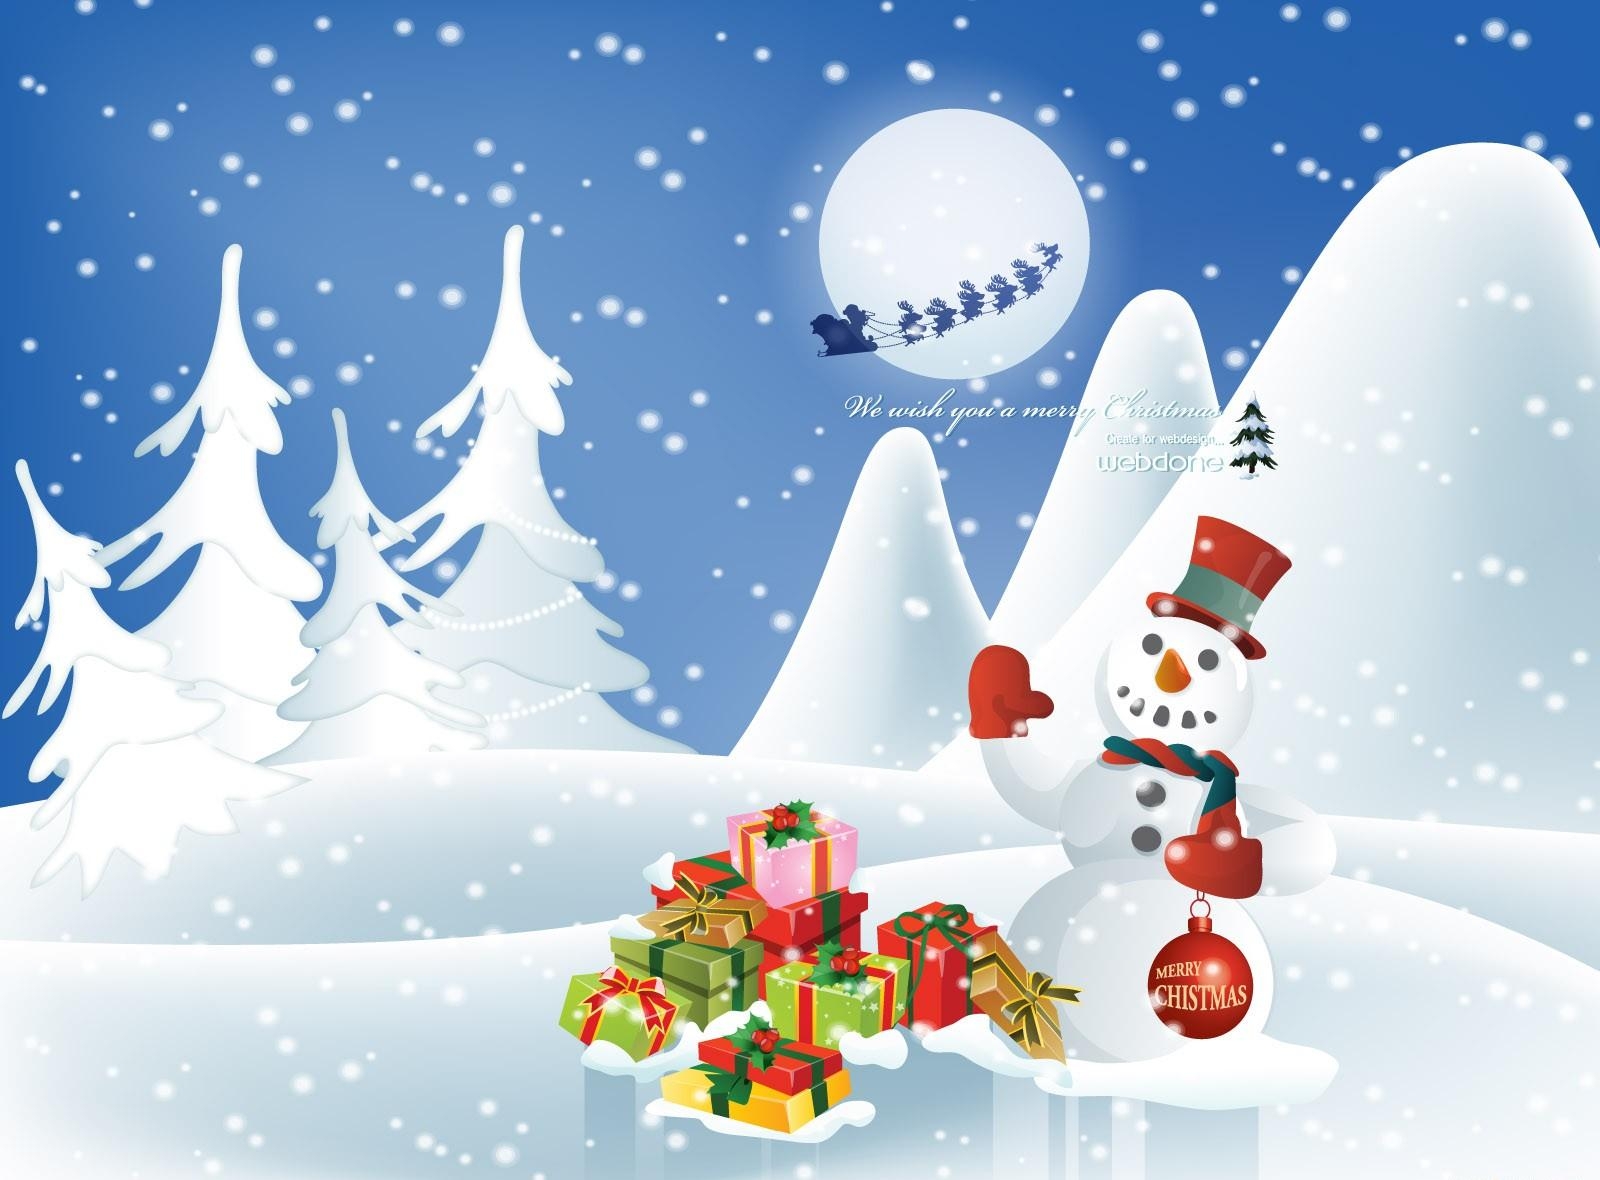 holidays, new year, moon, fir trees, deers, snowman, christmas, flight, inscription, sleigh, sledge, presents, gifts